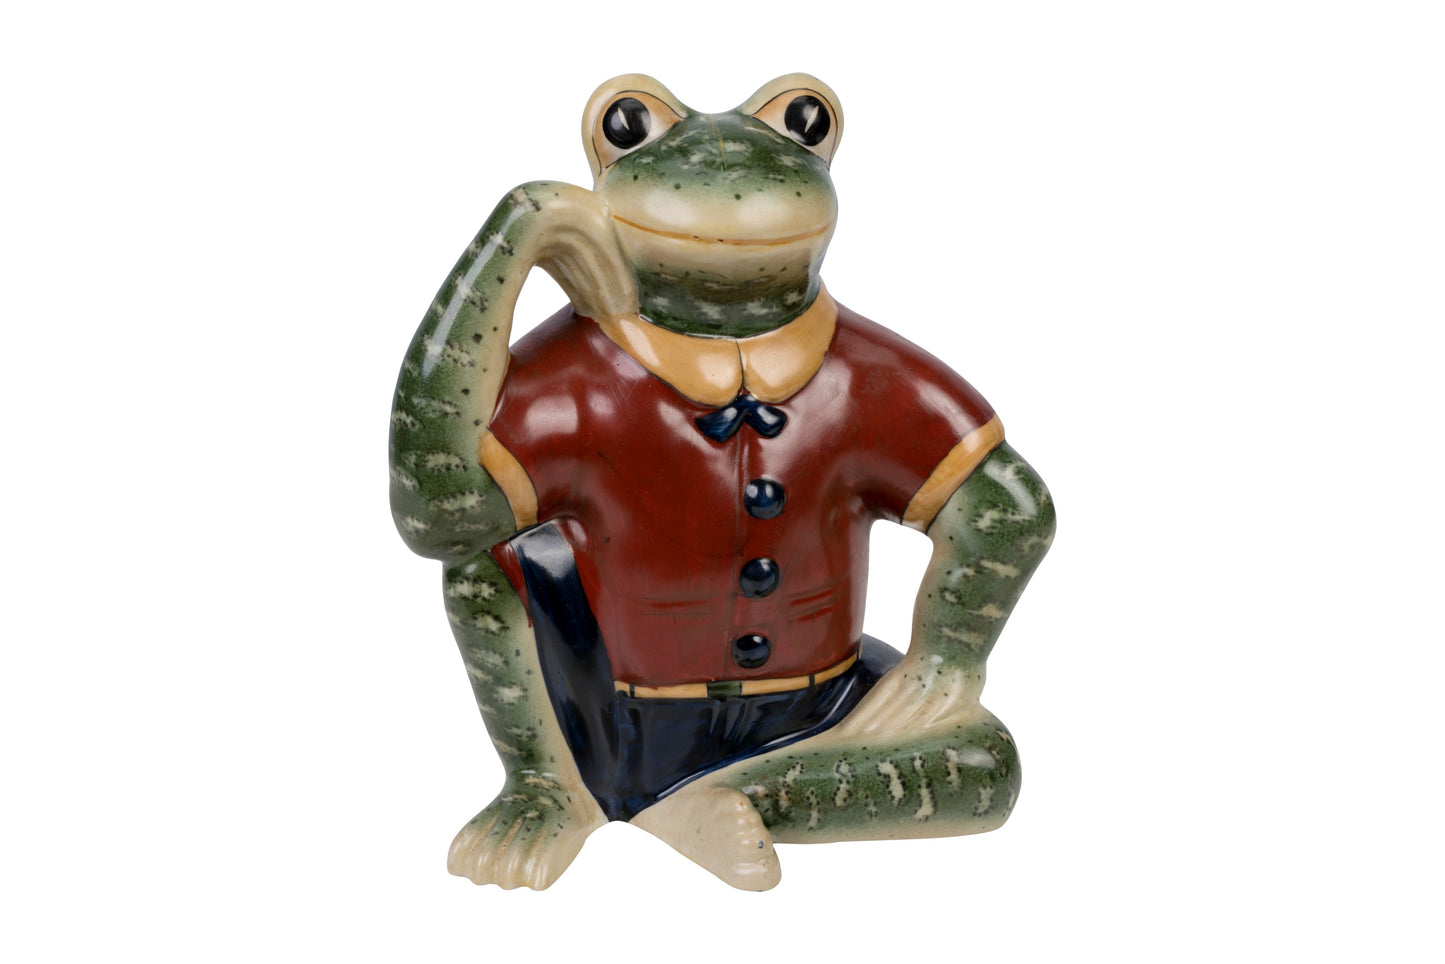 Cute Porcelain Sitting Frog Figurine In Red Jacket 10"